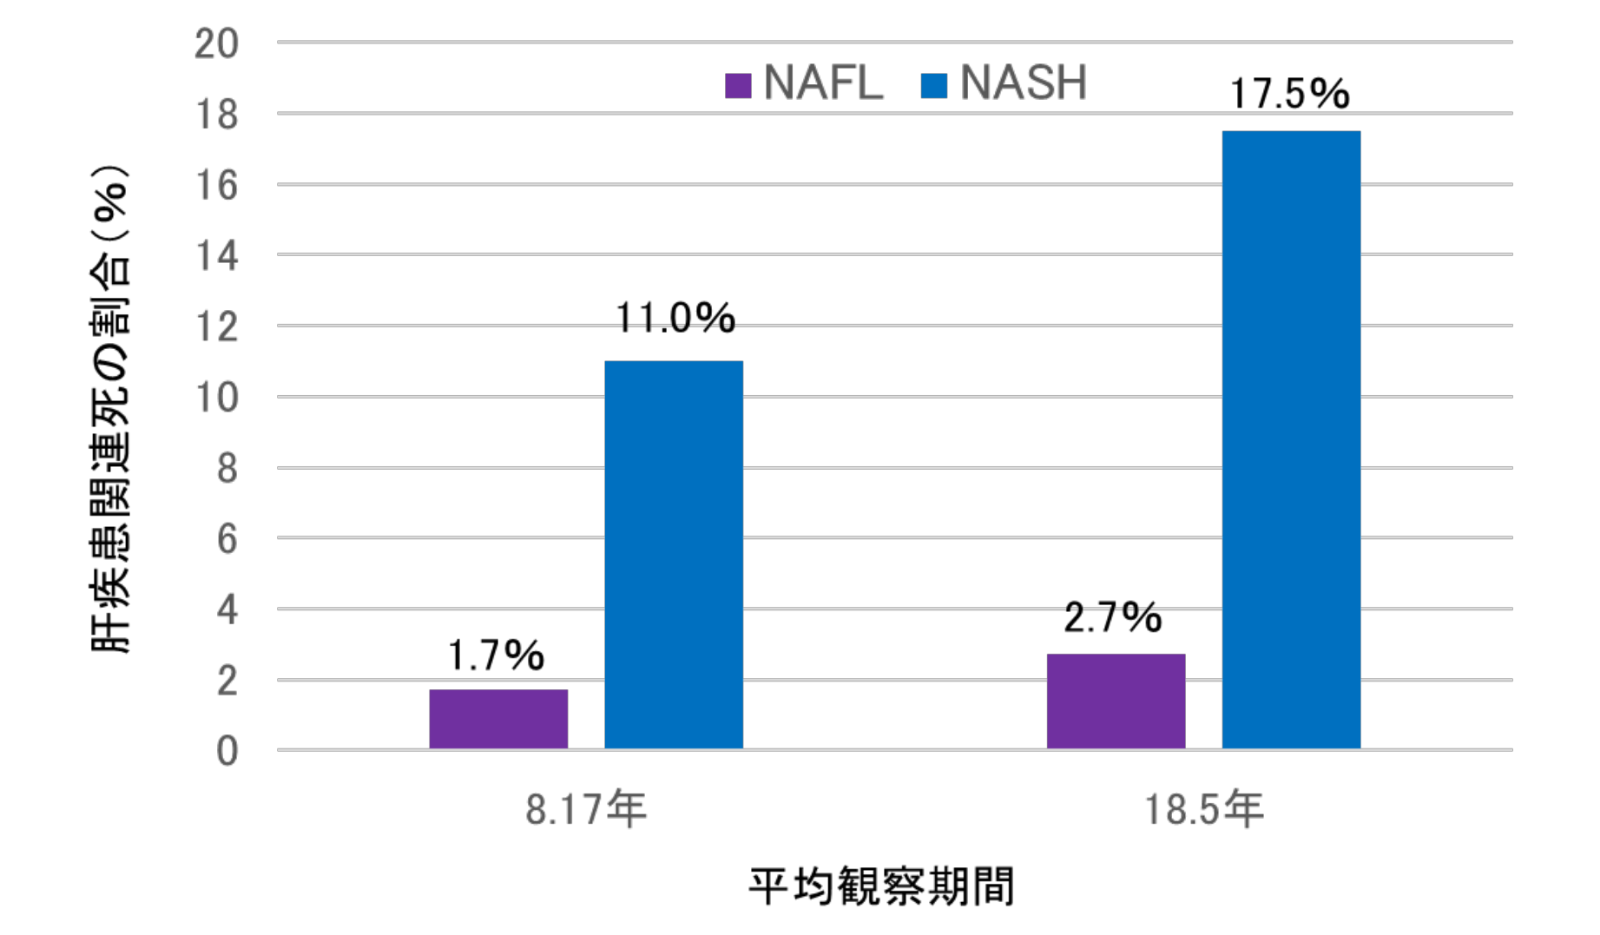 NAFLとNASHの肝疾患関連死亡率の比較